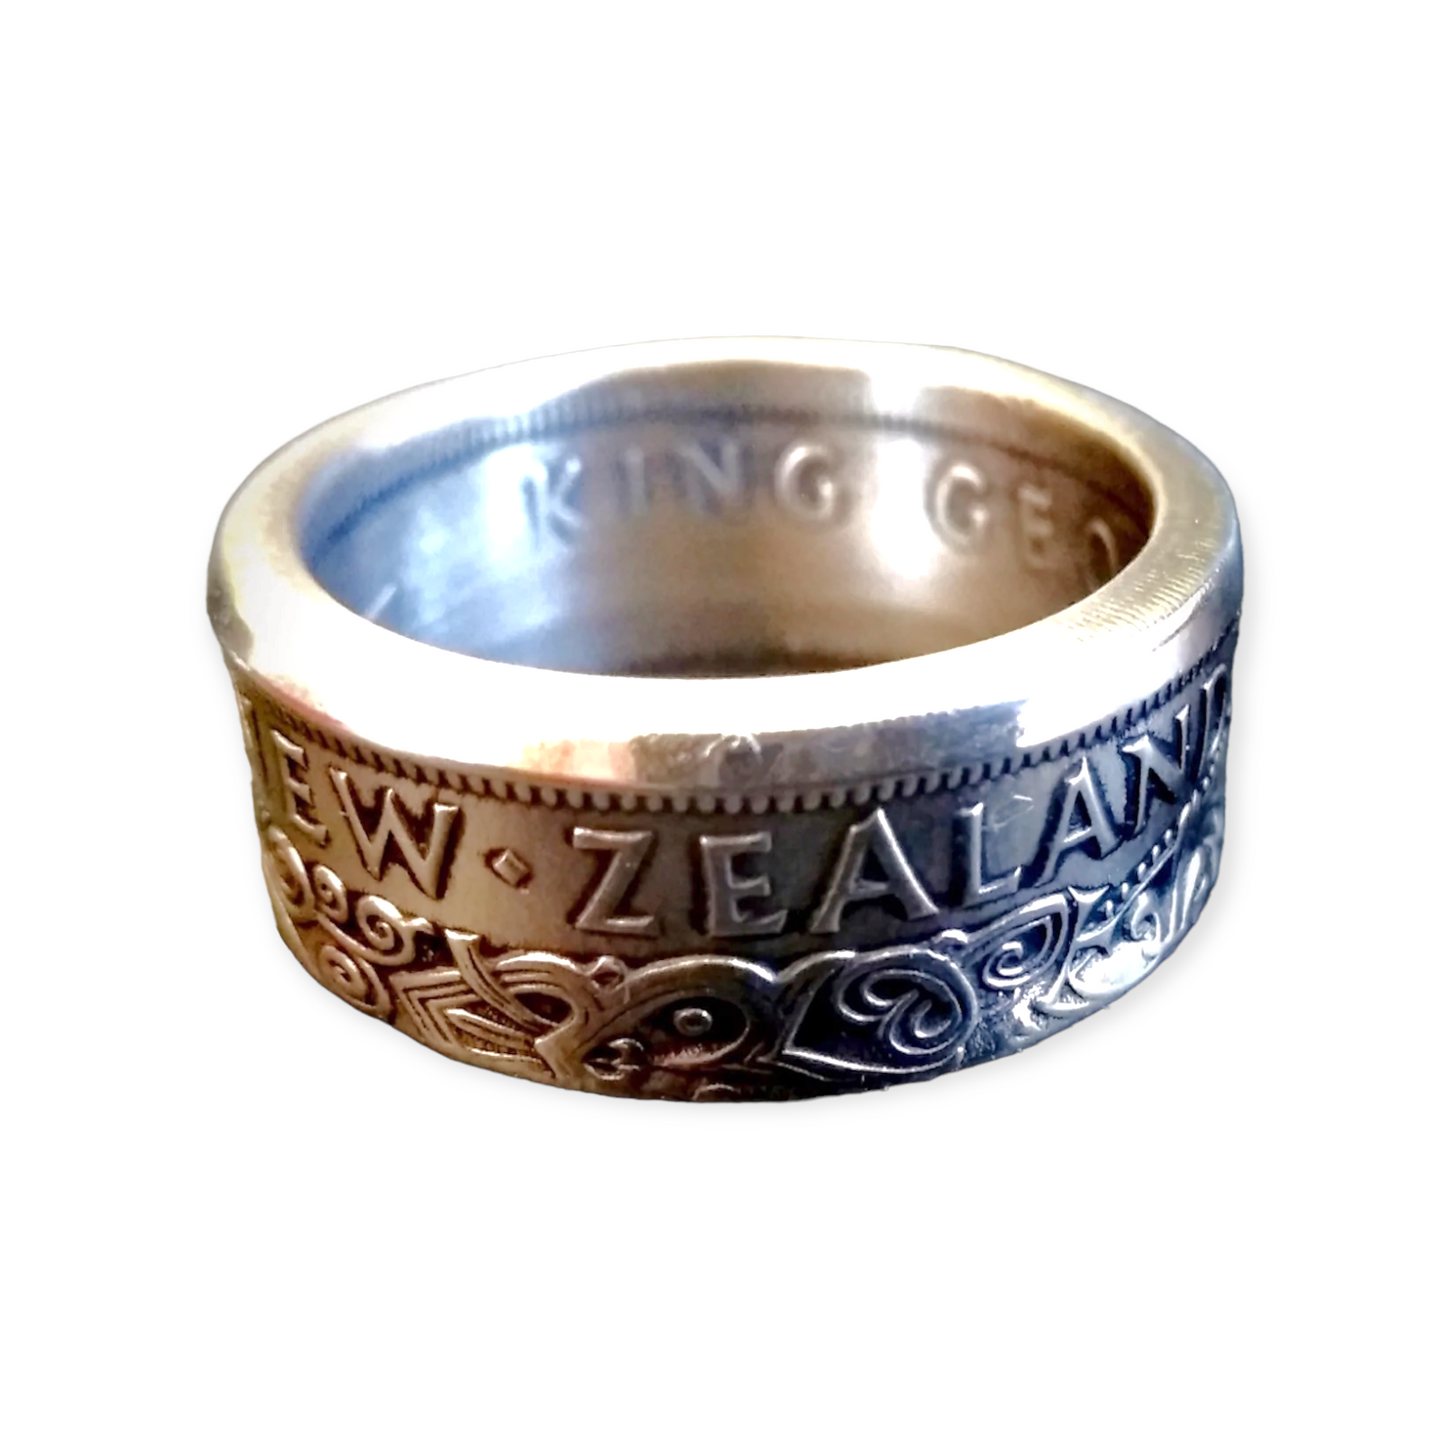 NZ half crown coin ring